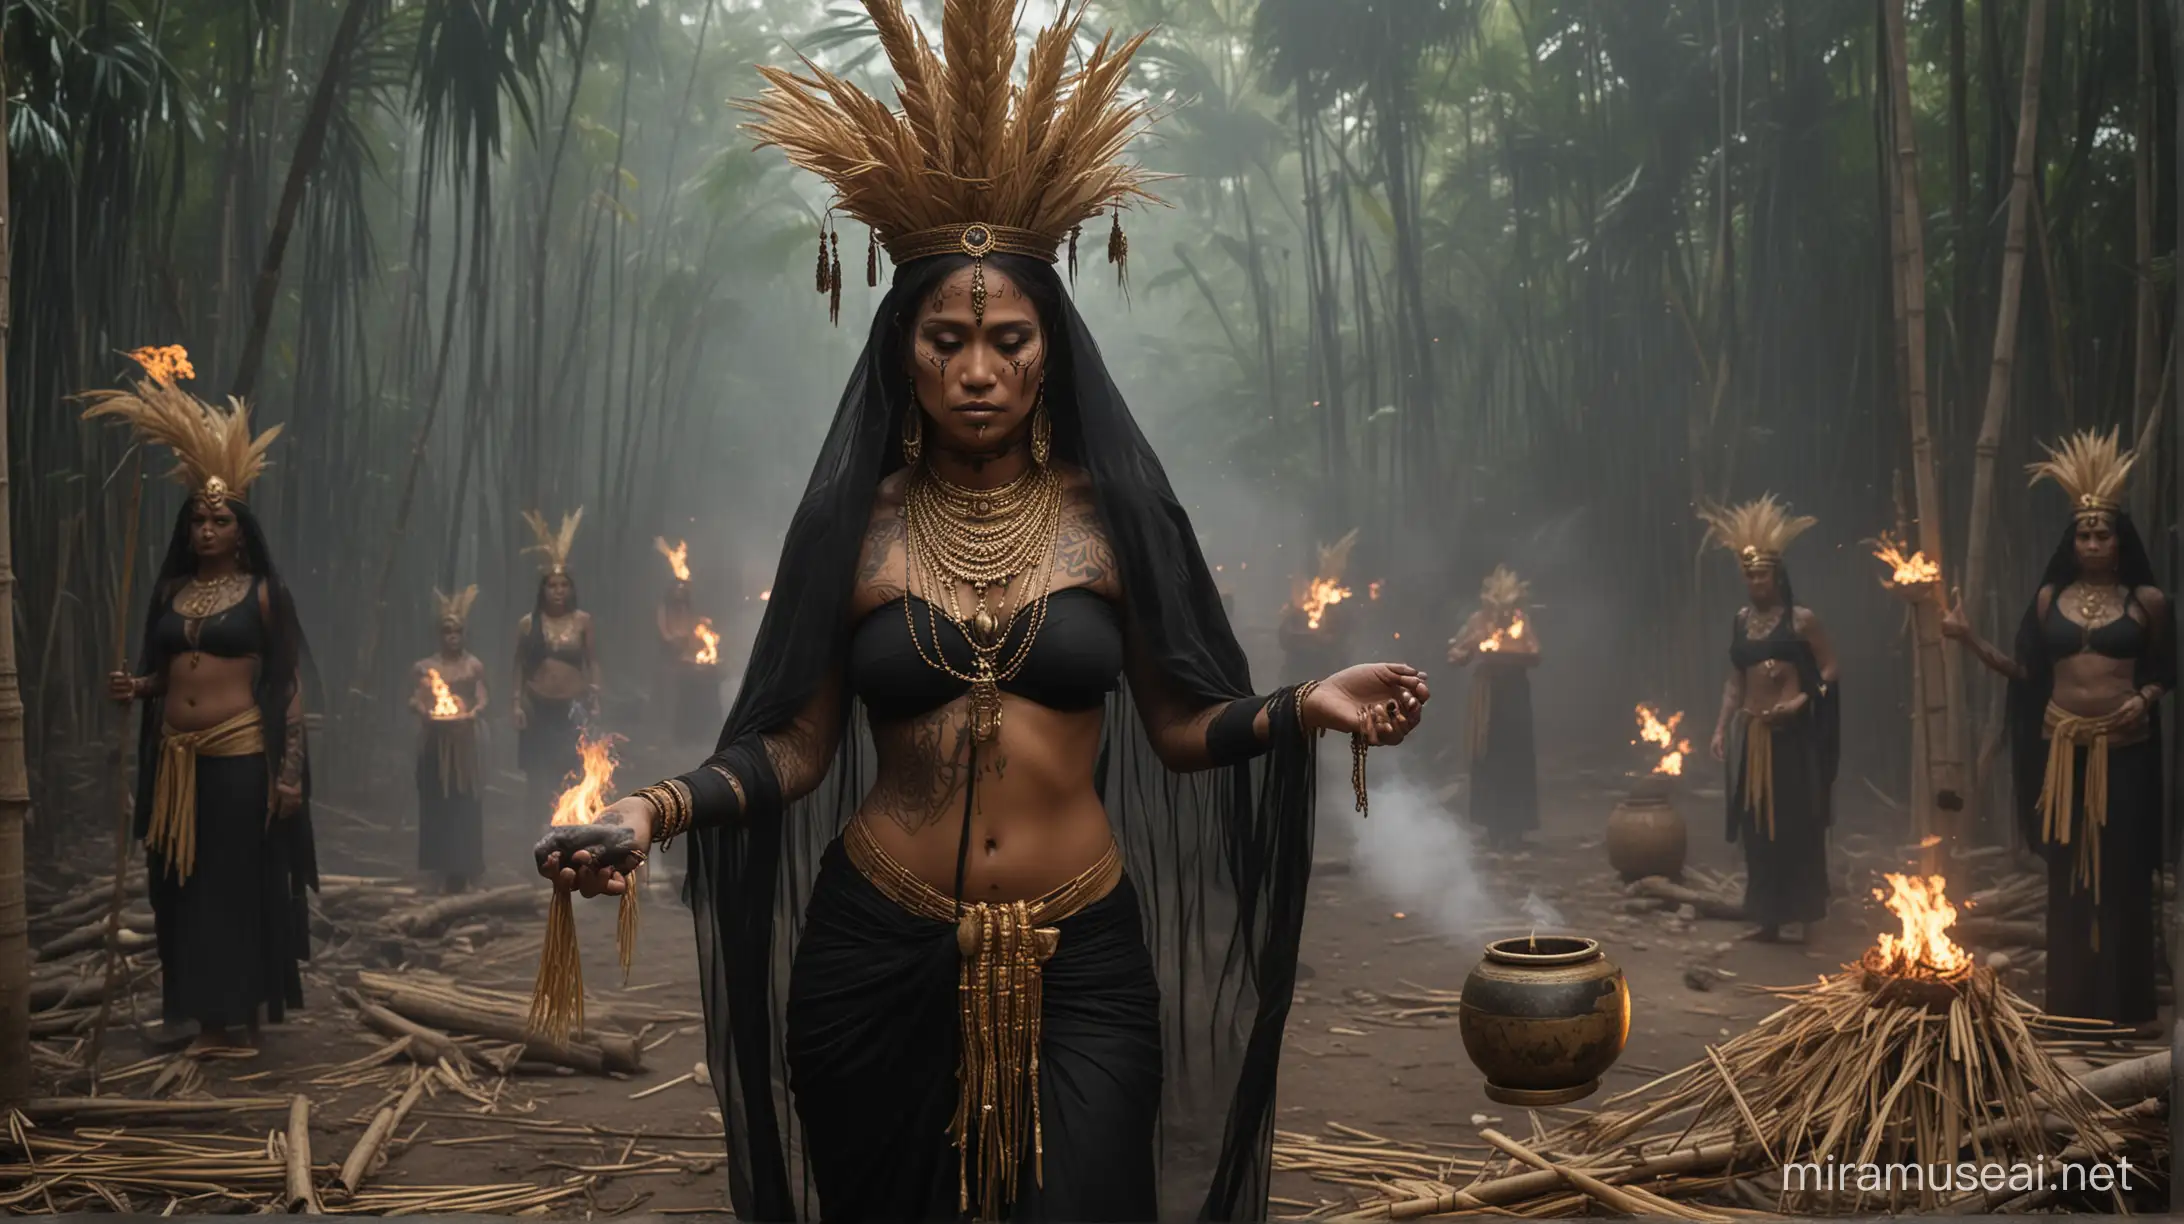 Precolonial Filipino Shamanic Priestess Performing Ritual at Night